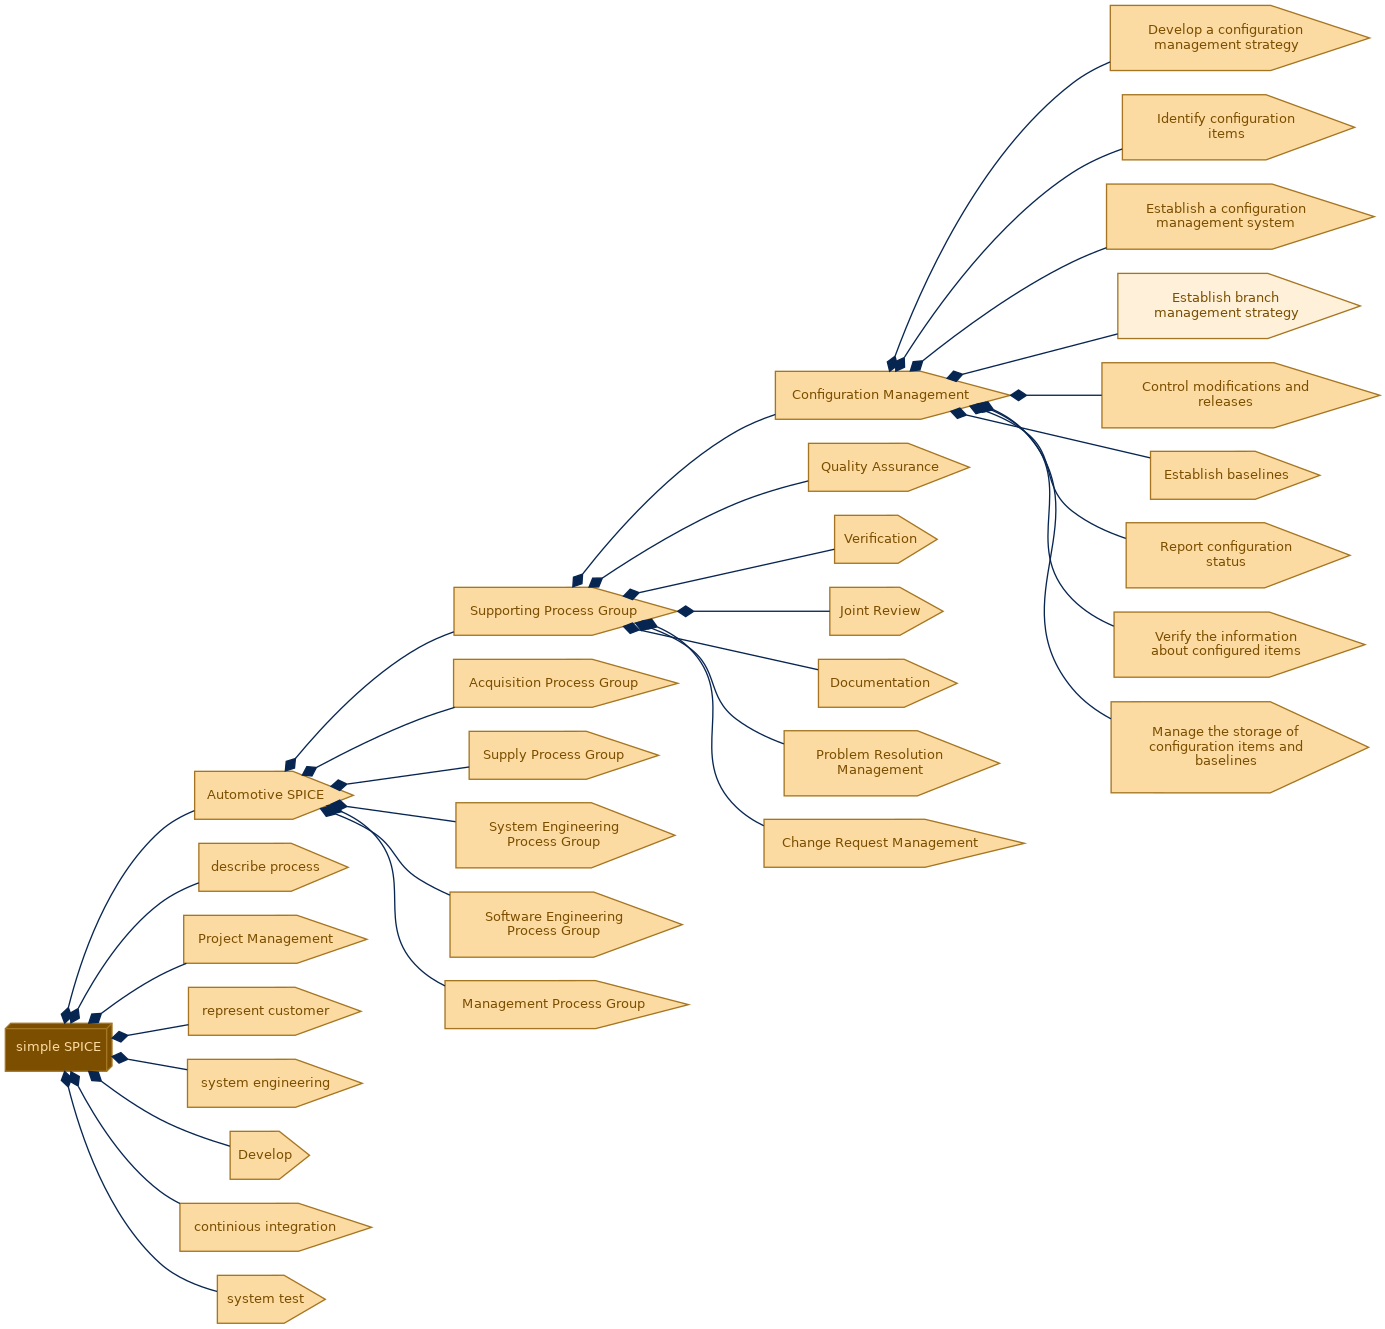 spem diagram of the activity breakdown: Establish branch management strategy